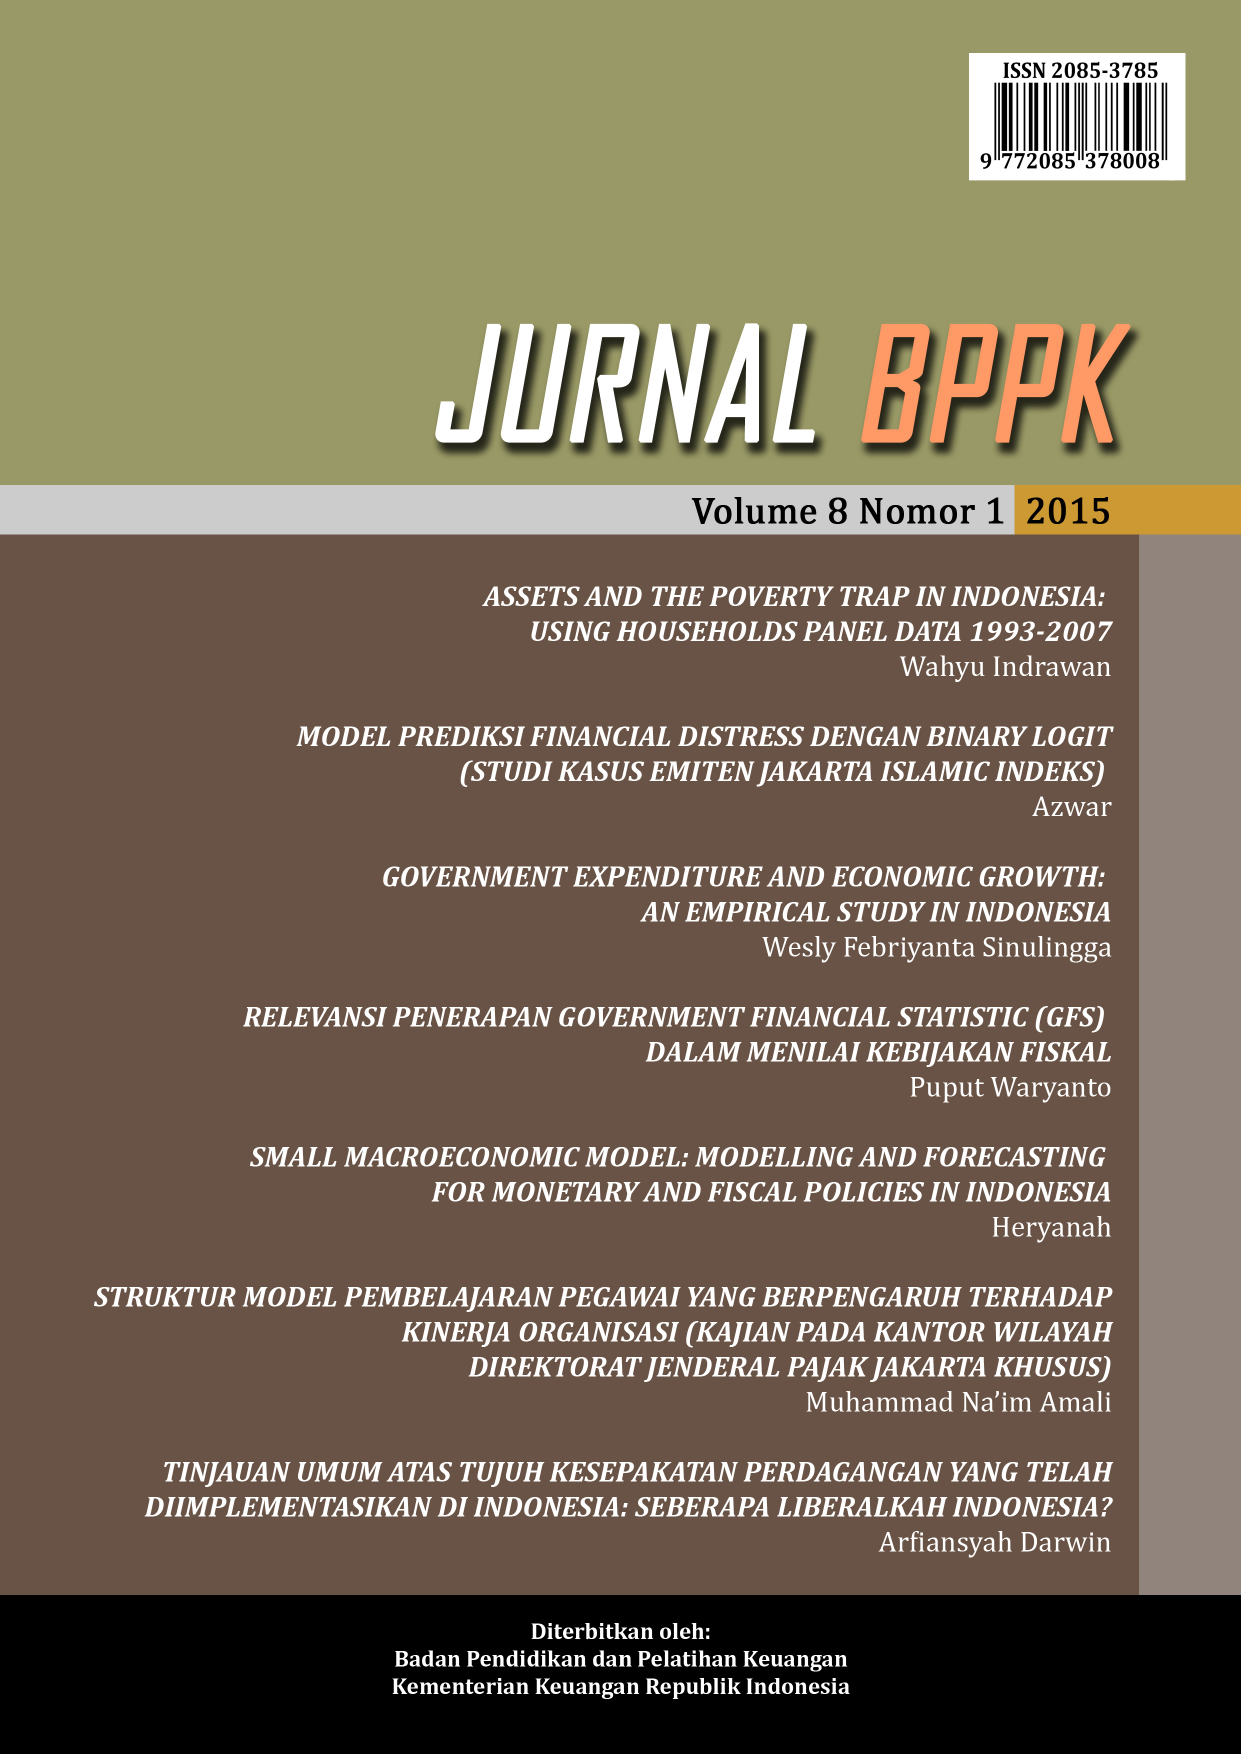 JURNAL BPPK ISSN 2085 3785 Volume 8 Nomor 1 2015 halaman 1 140 Jurnal BPPK merupakan publikasi ilmiah yang berisi tulisan yang diangkat dari hasil